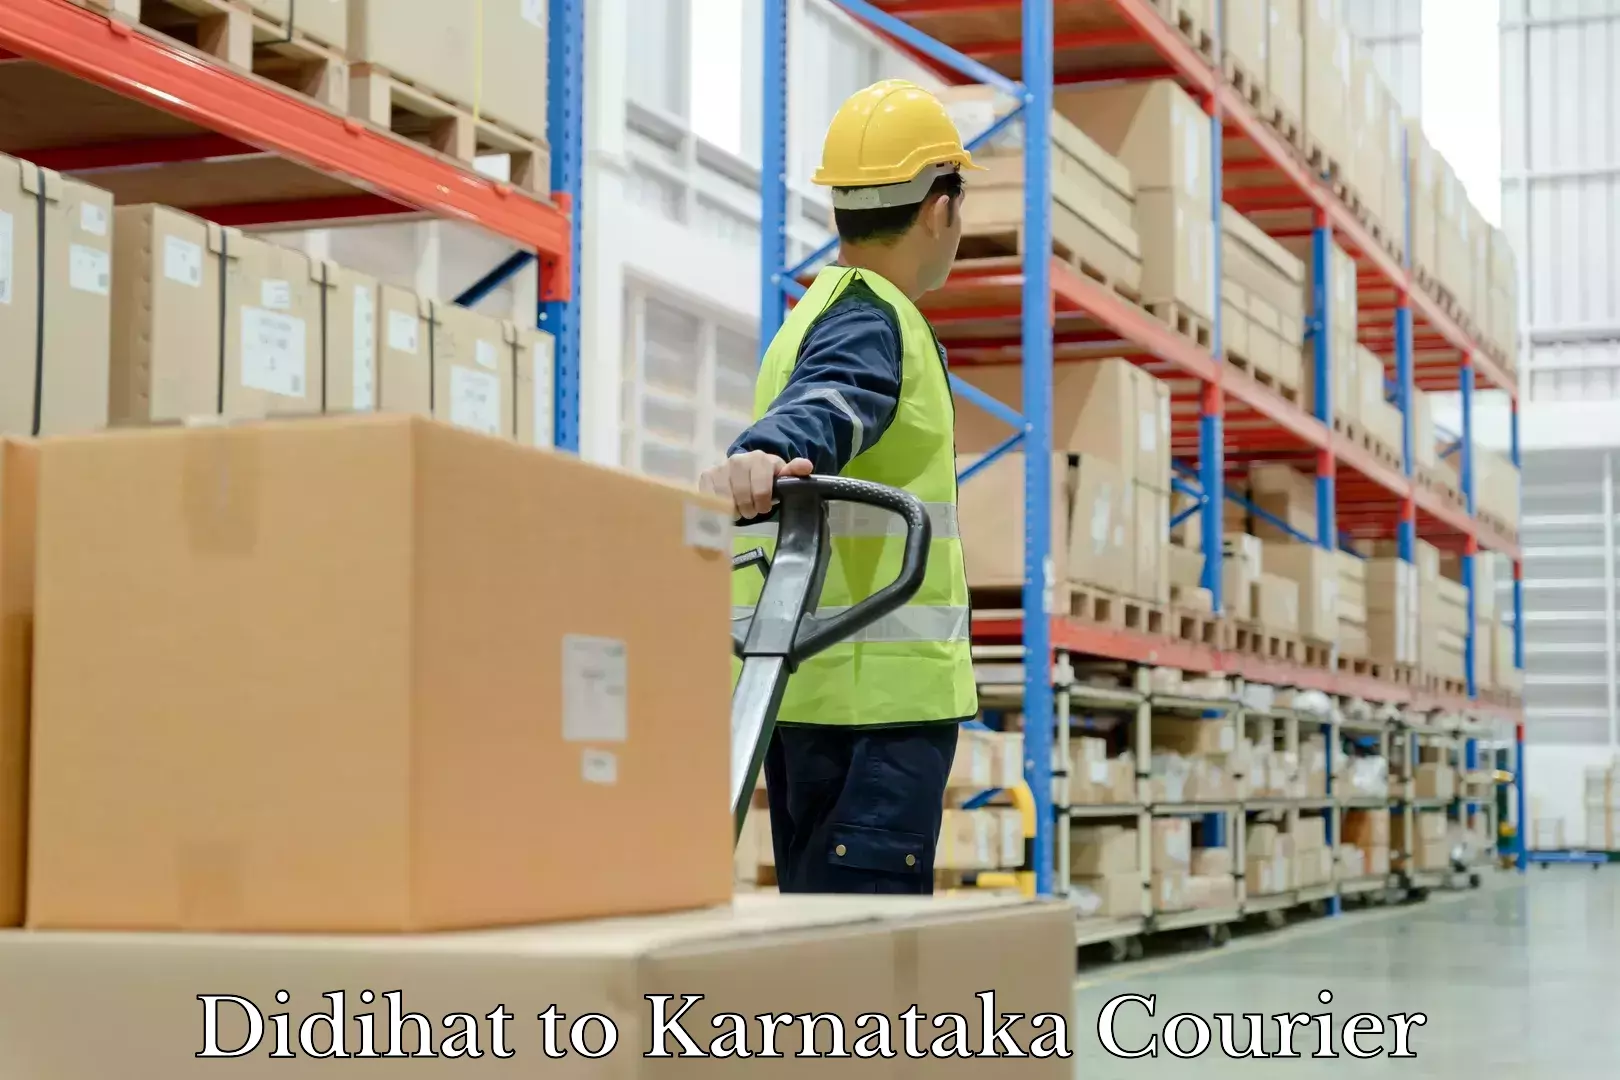 Luggage shipment specialists Didihat to Karnataka